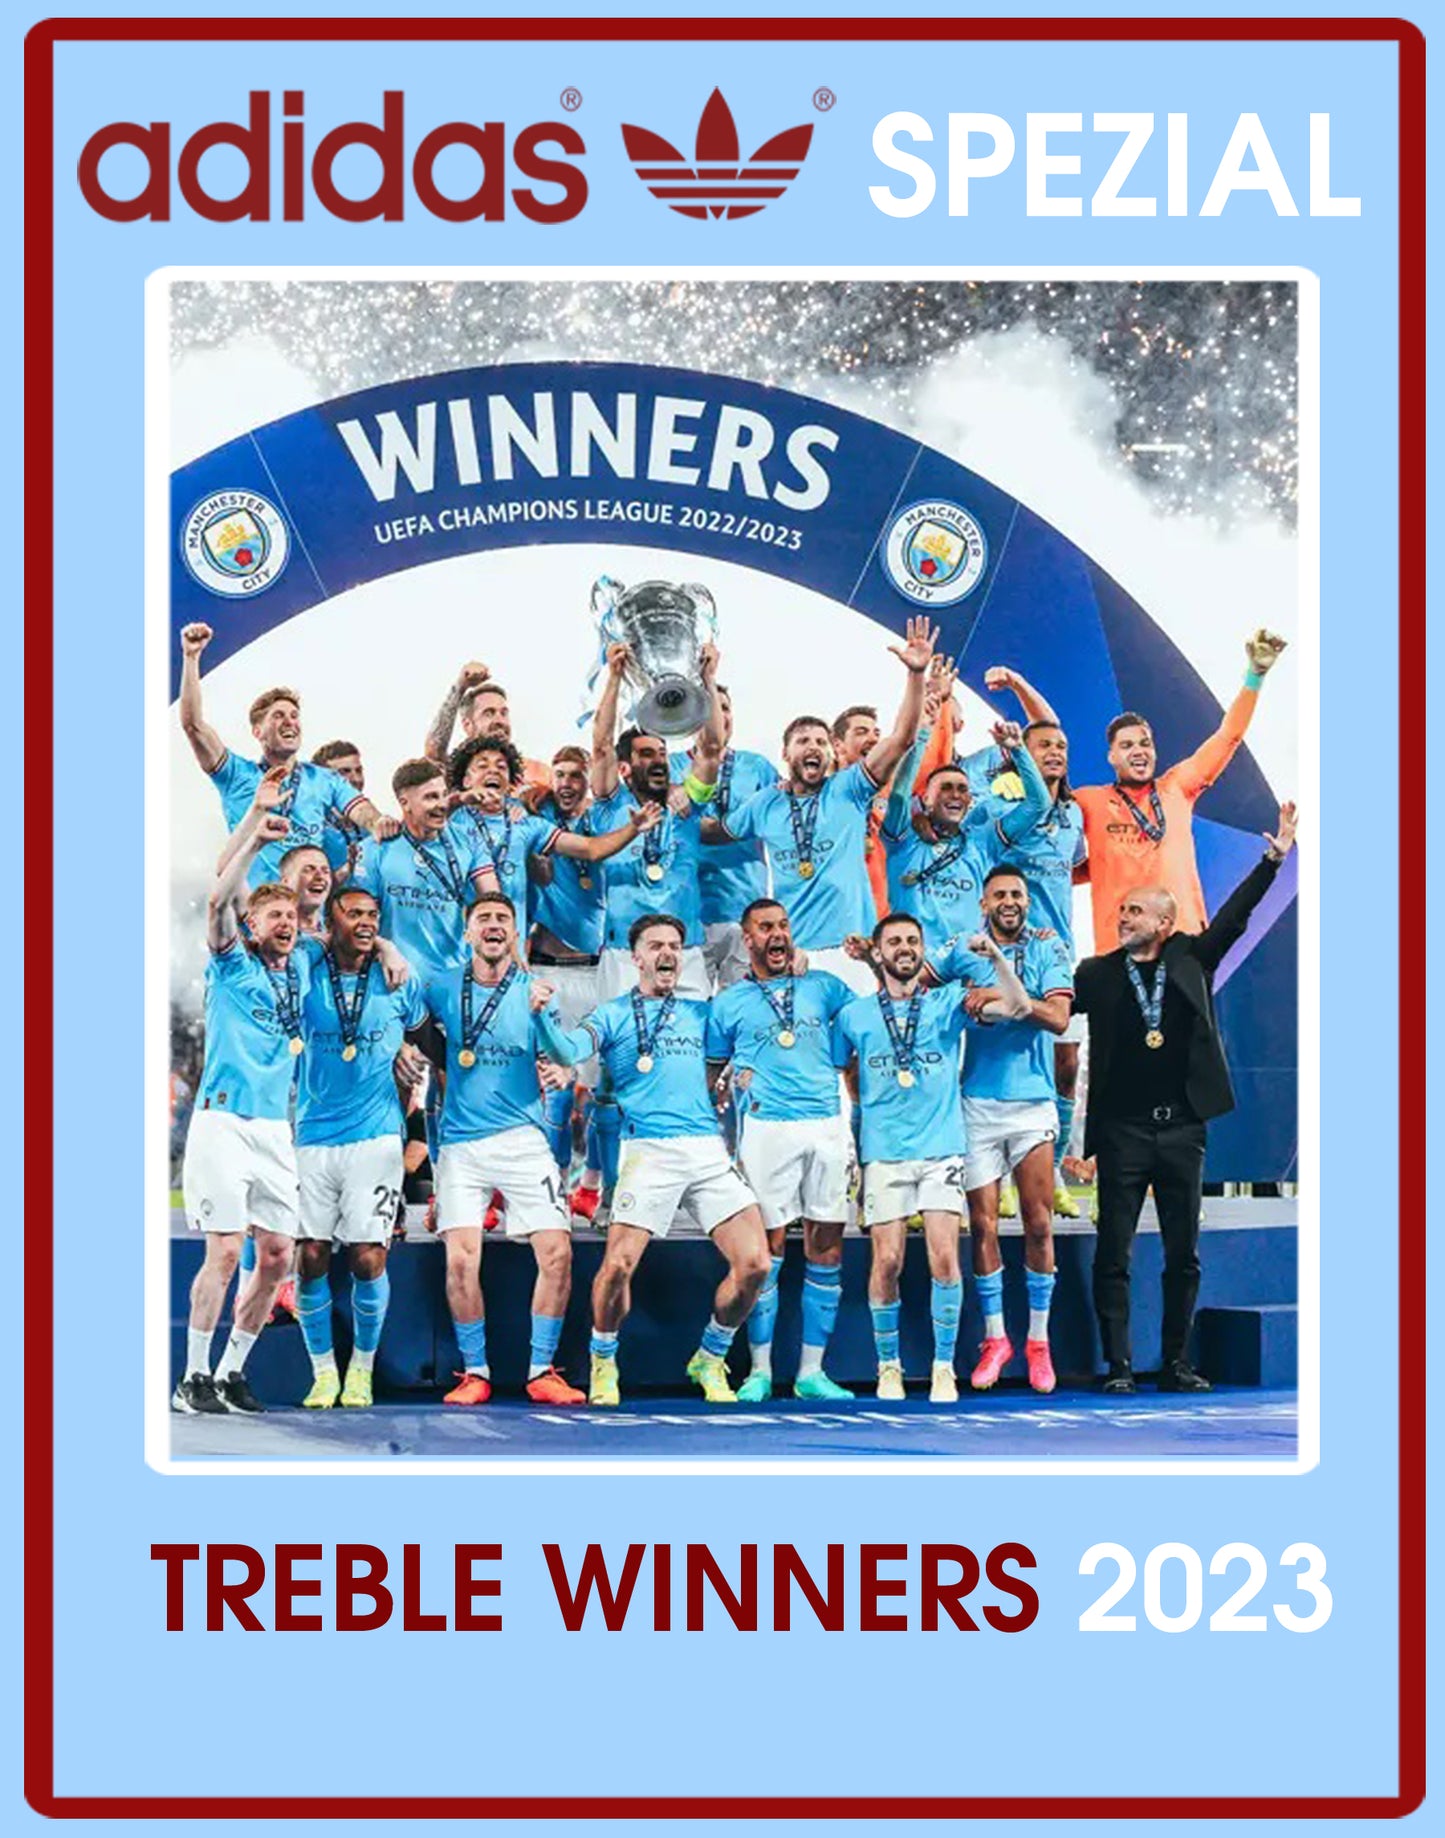 Limited edition Manchester City Treble Winners `23 inspired light blue/ white / burgundy Adidas custom Handball Spezial trainers / sneakers